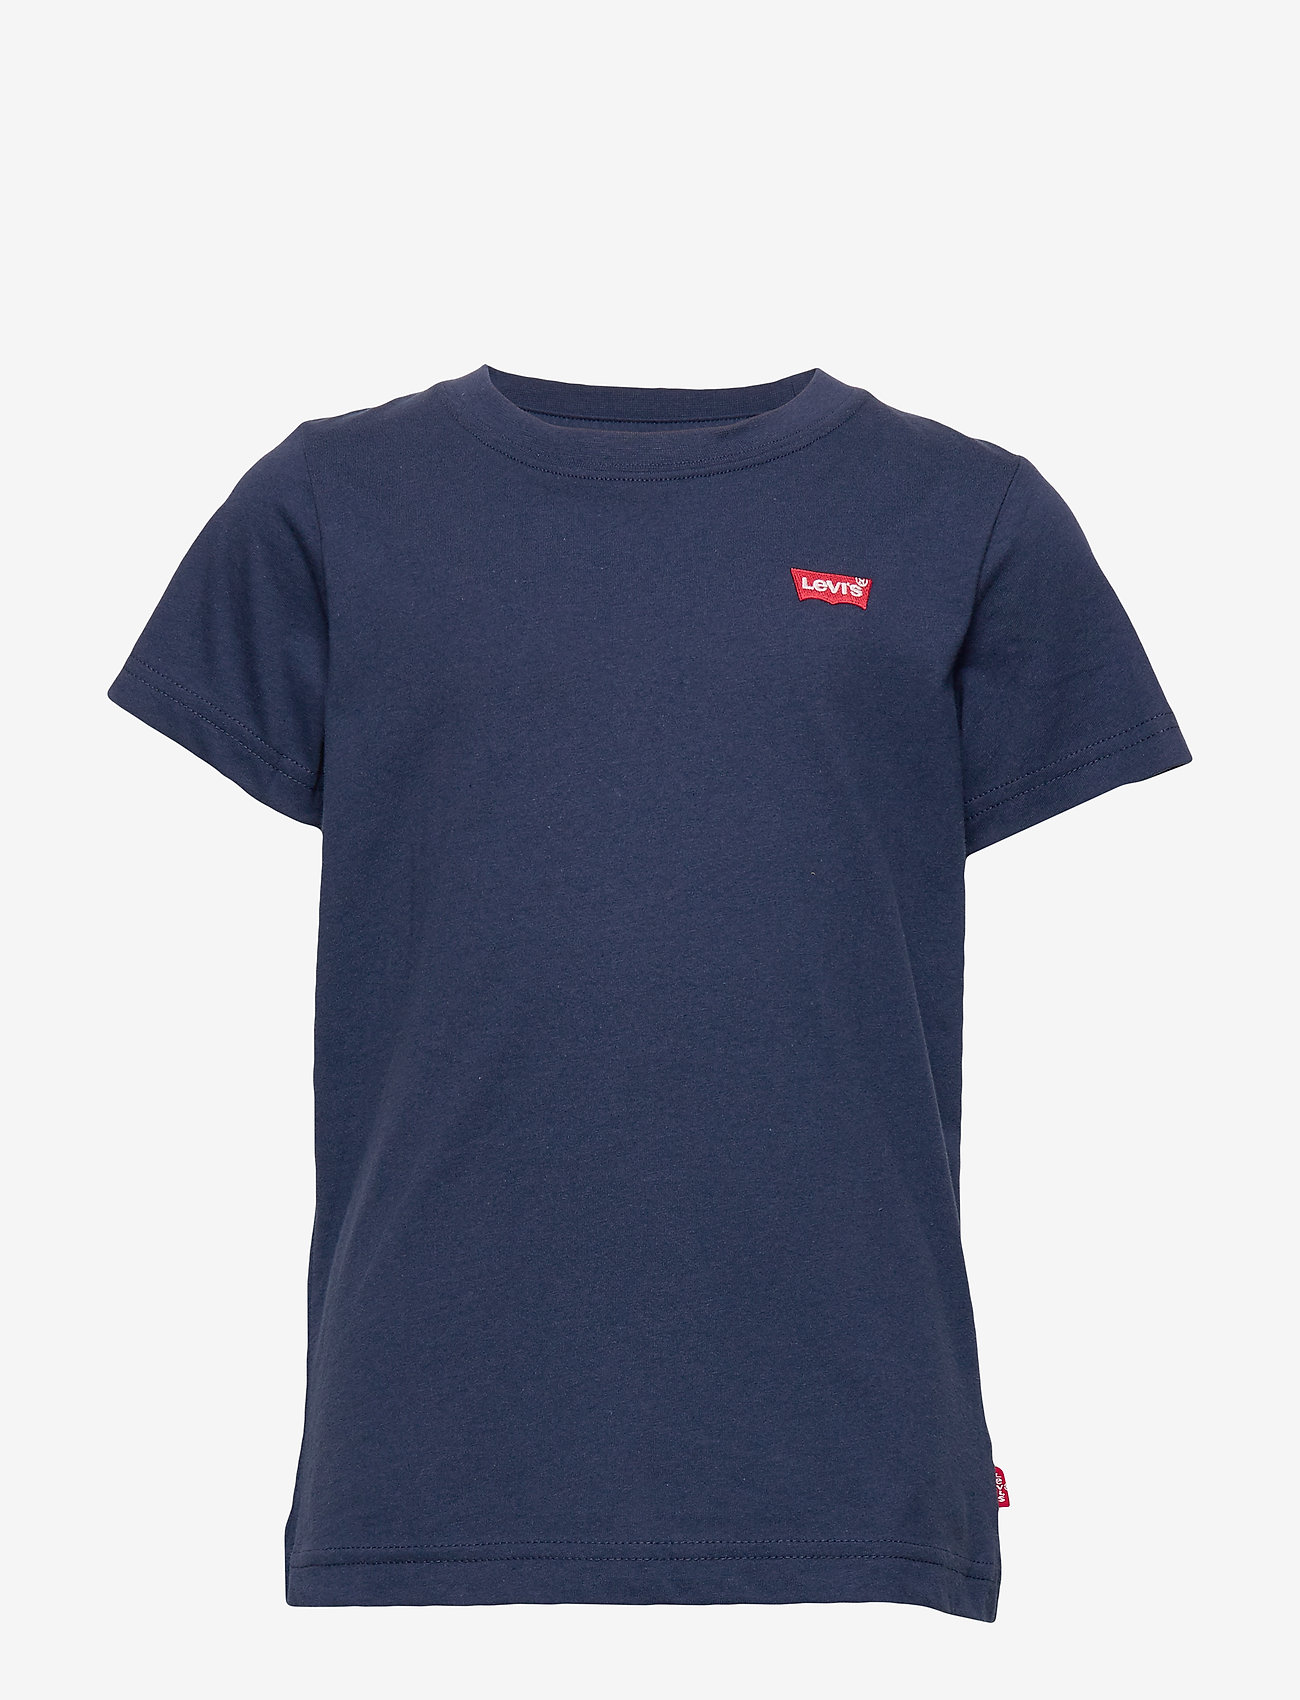 Levi's - Levi's® Graphic Tee Shirt - kortärmade t-shirts - dress blues - 0